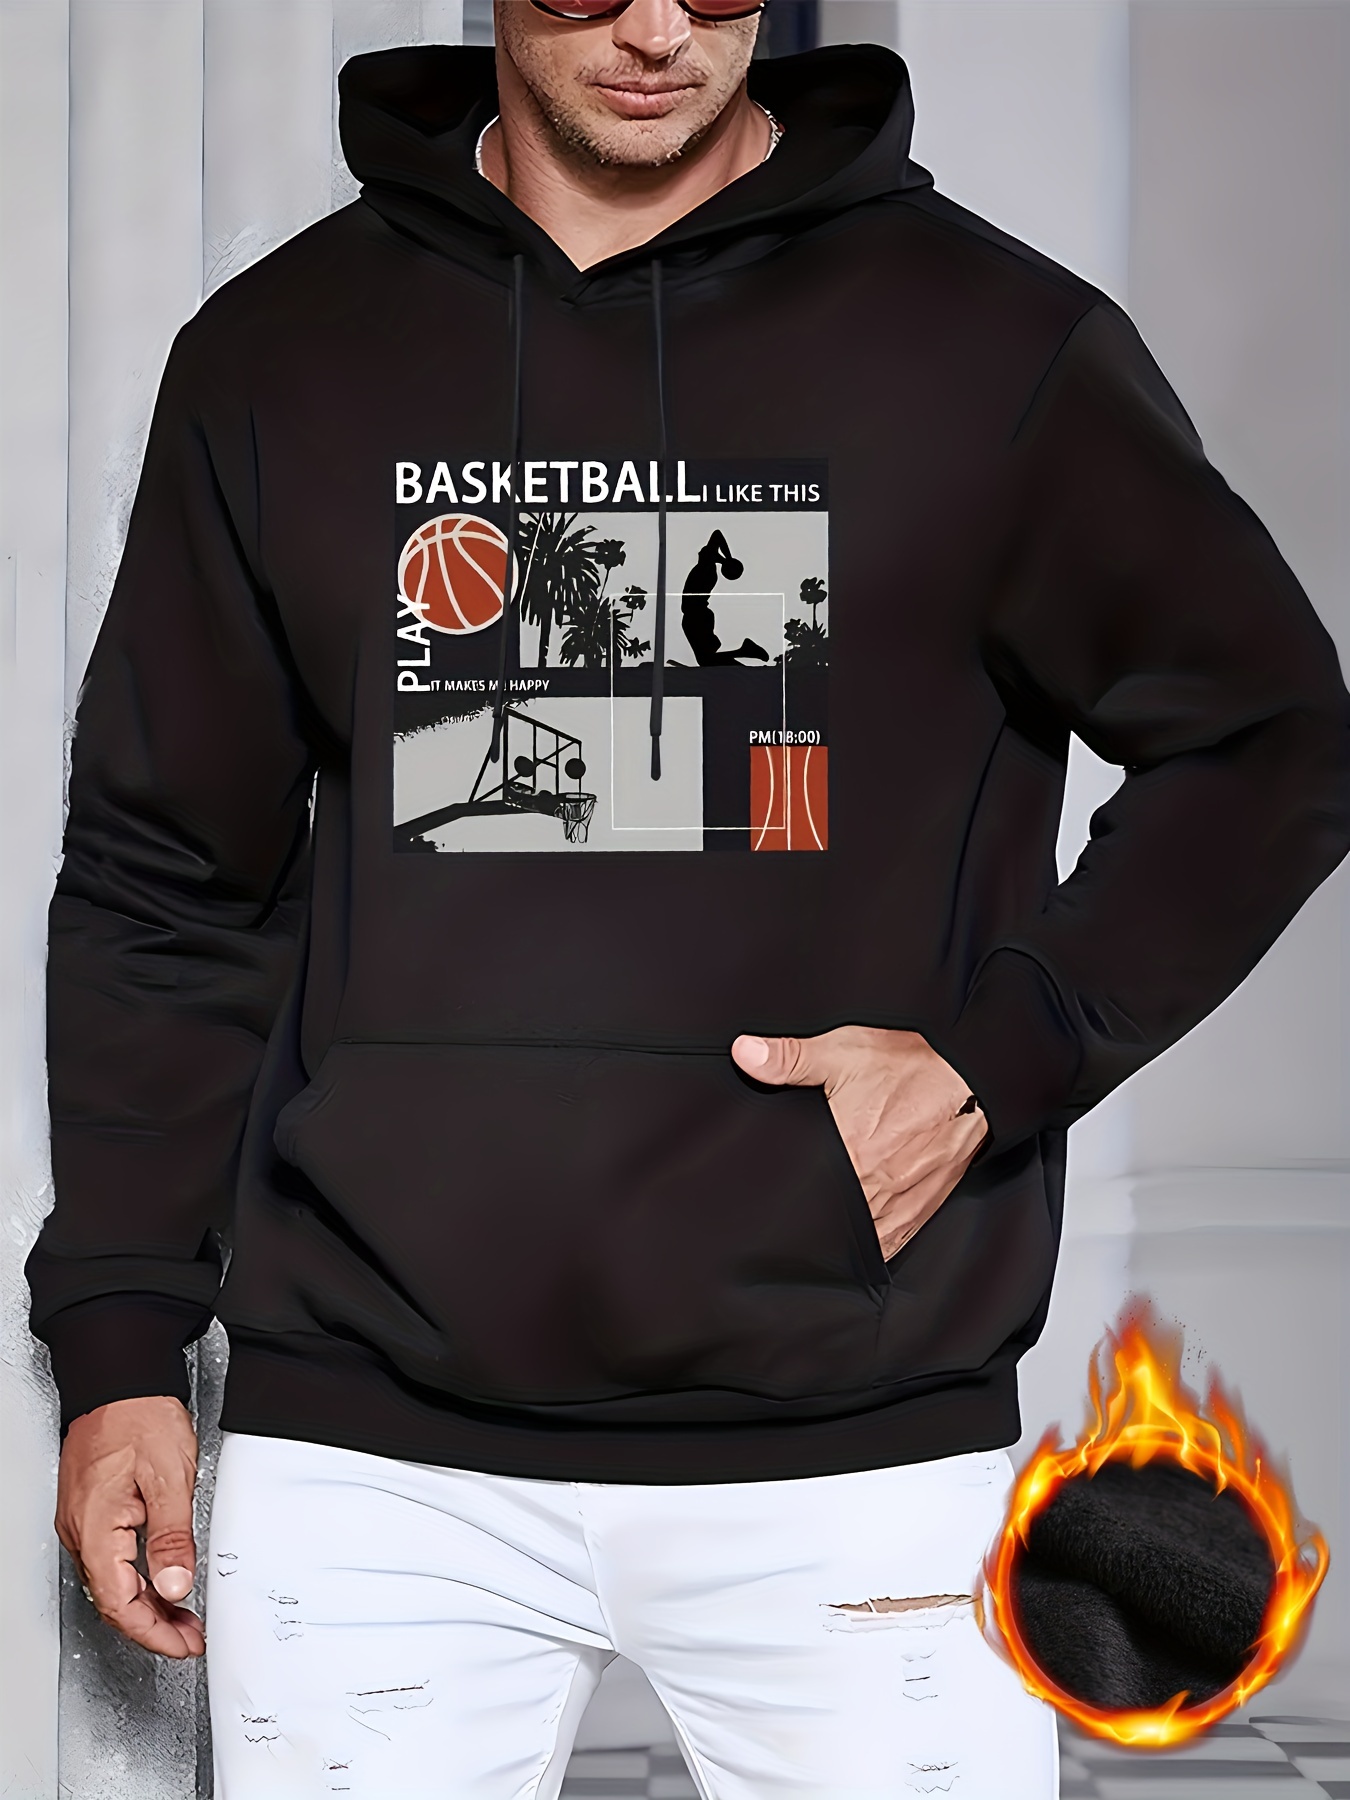 Basketball Hoodies & Pullovers.